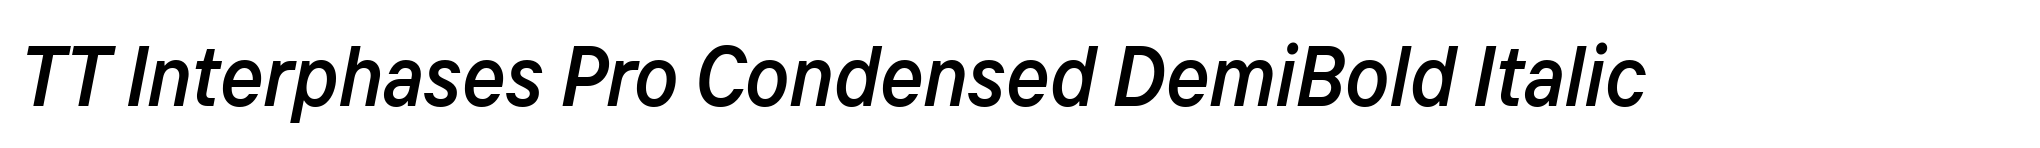 TT Interphases Pro Condensed DemiBold Italic image